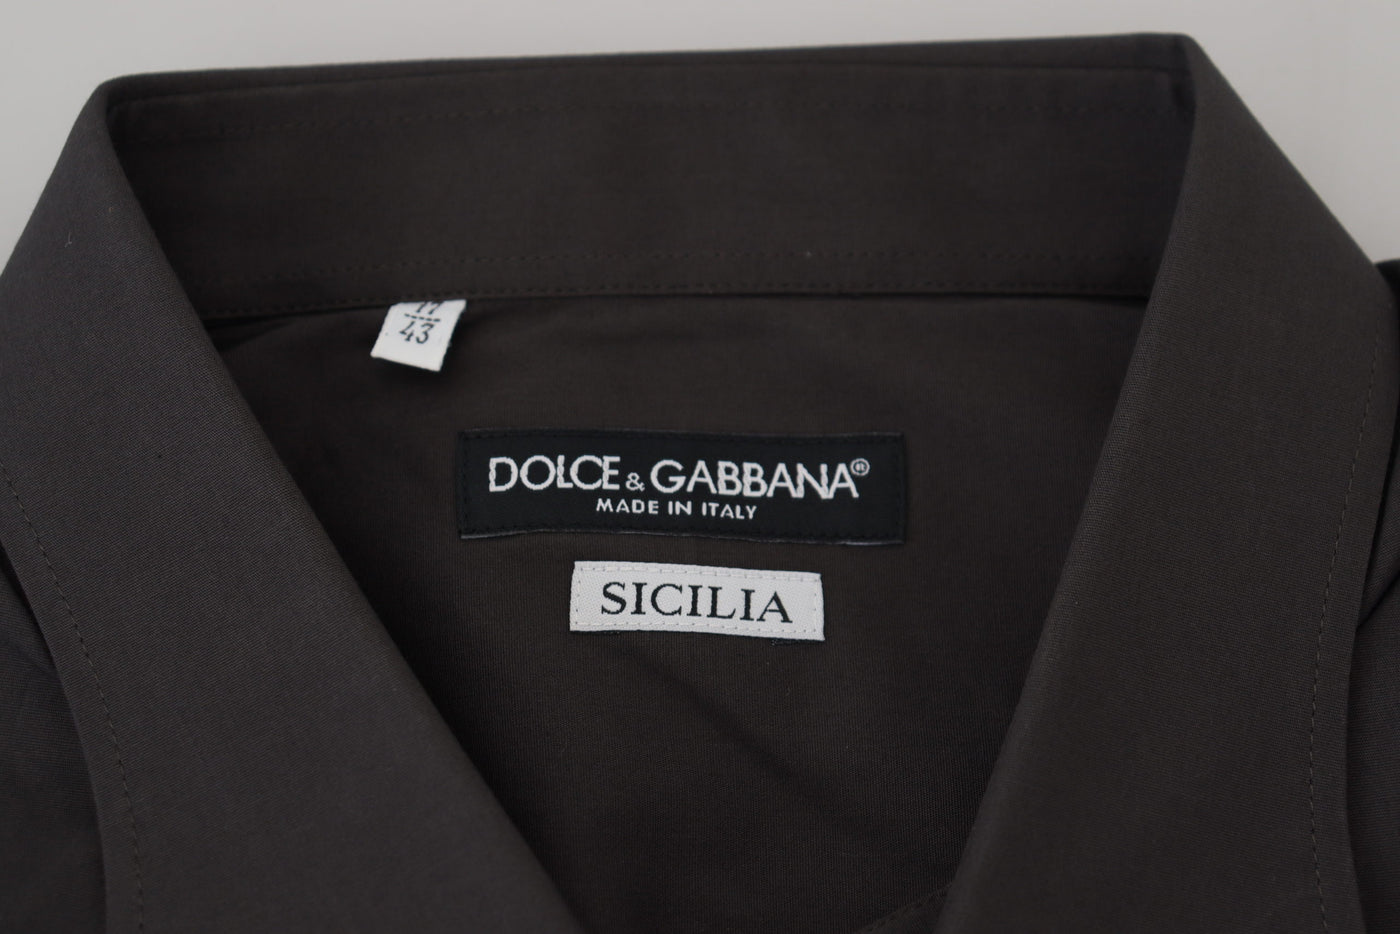 Dolce & Gabbana Gray SICILIA Slim Fit Stretch Dress Shirt